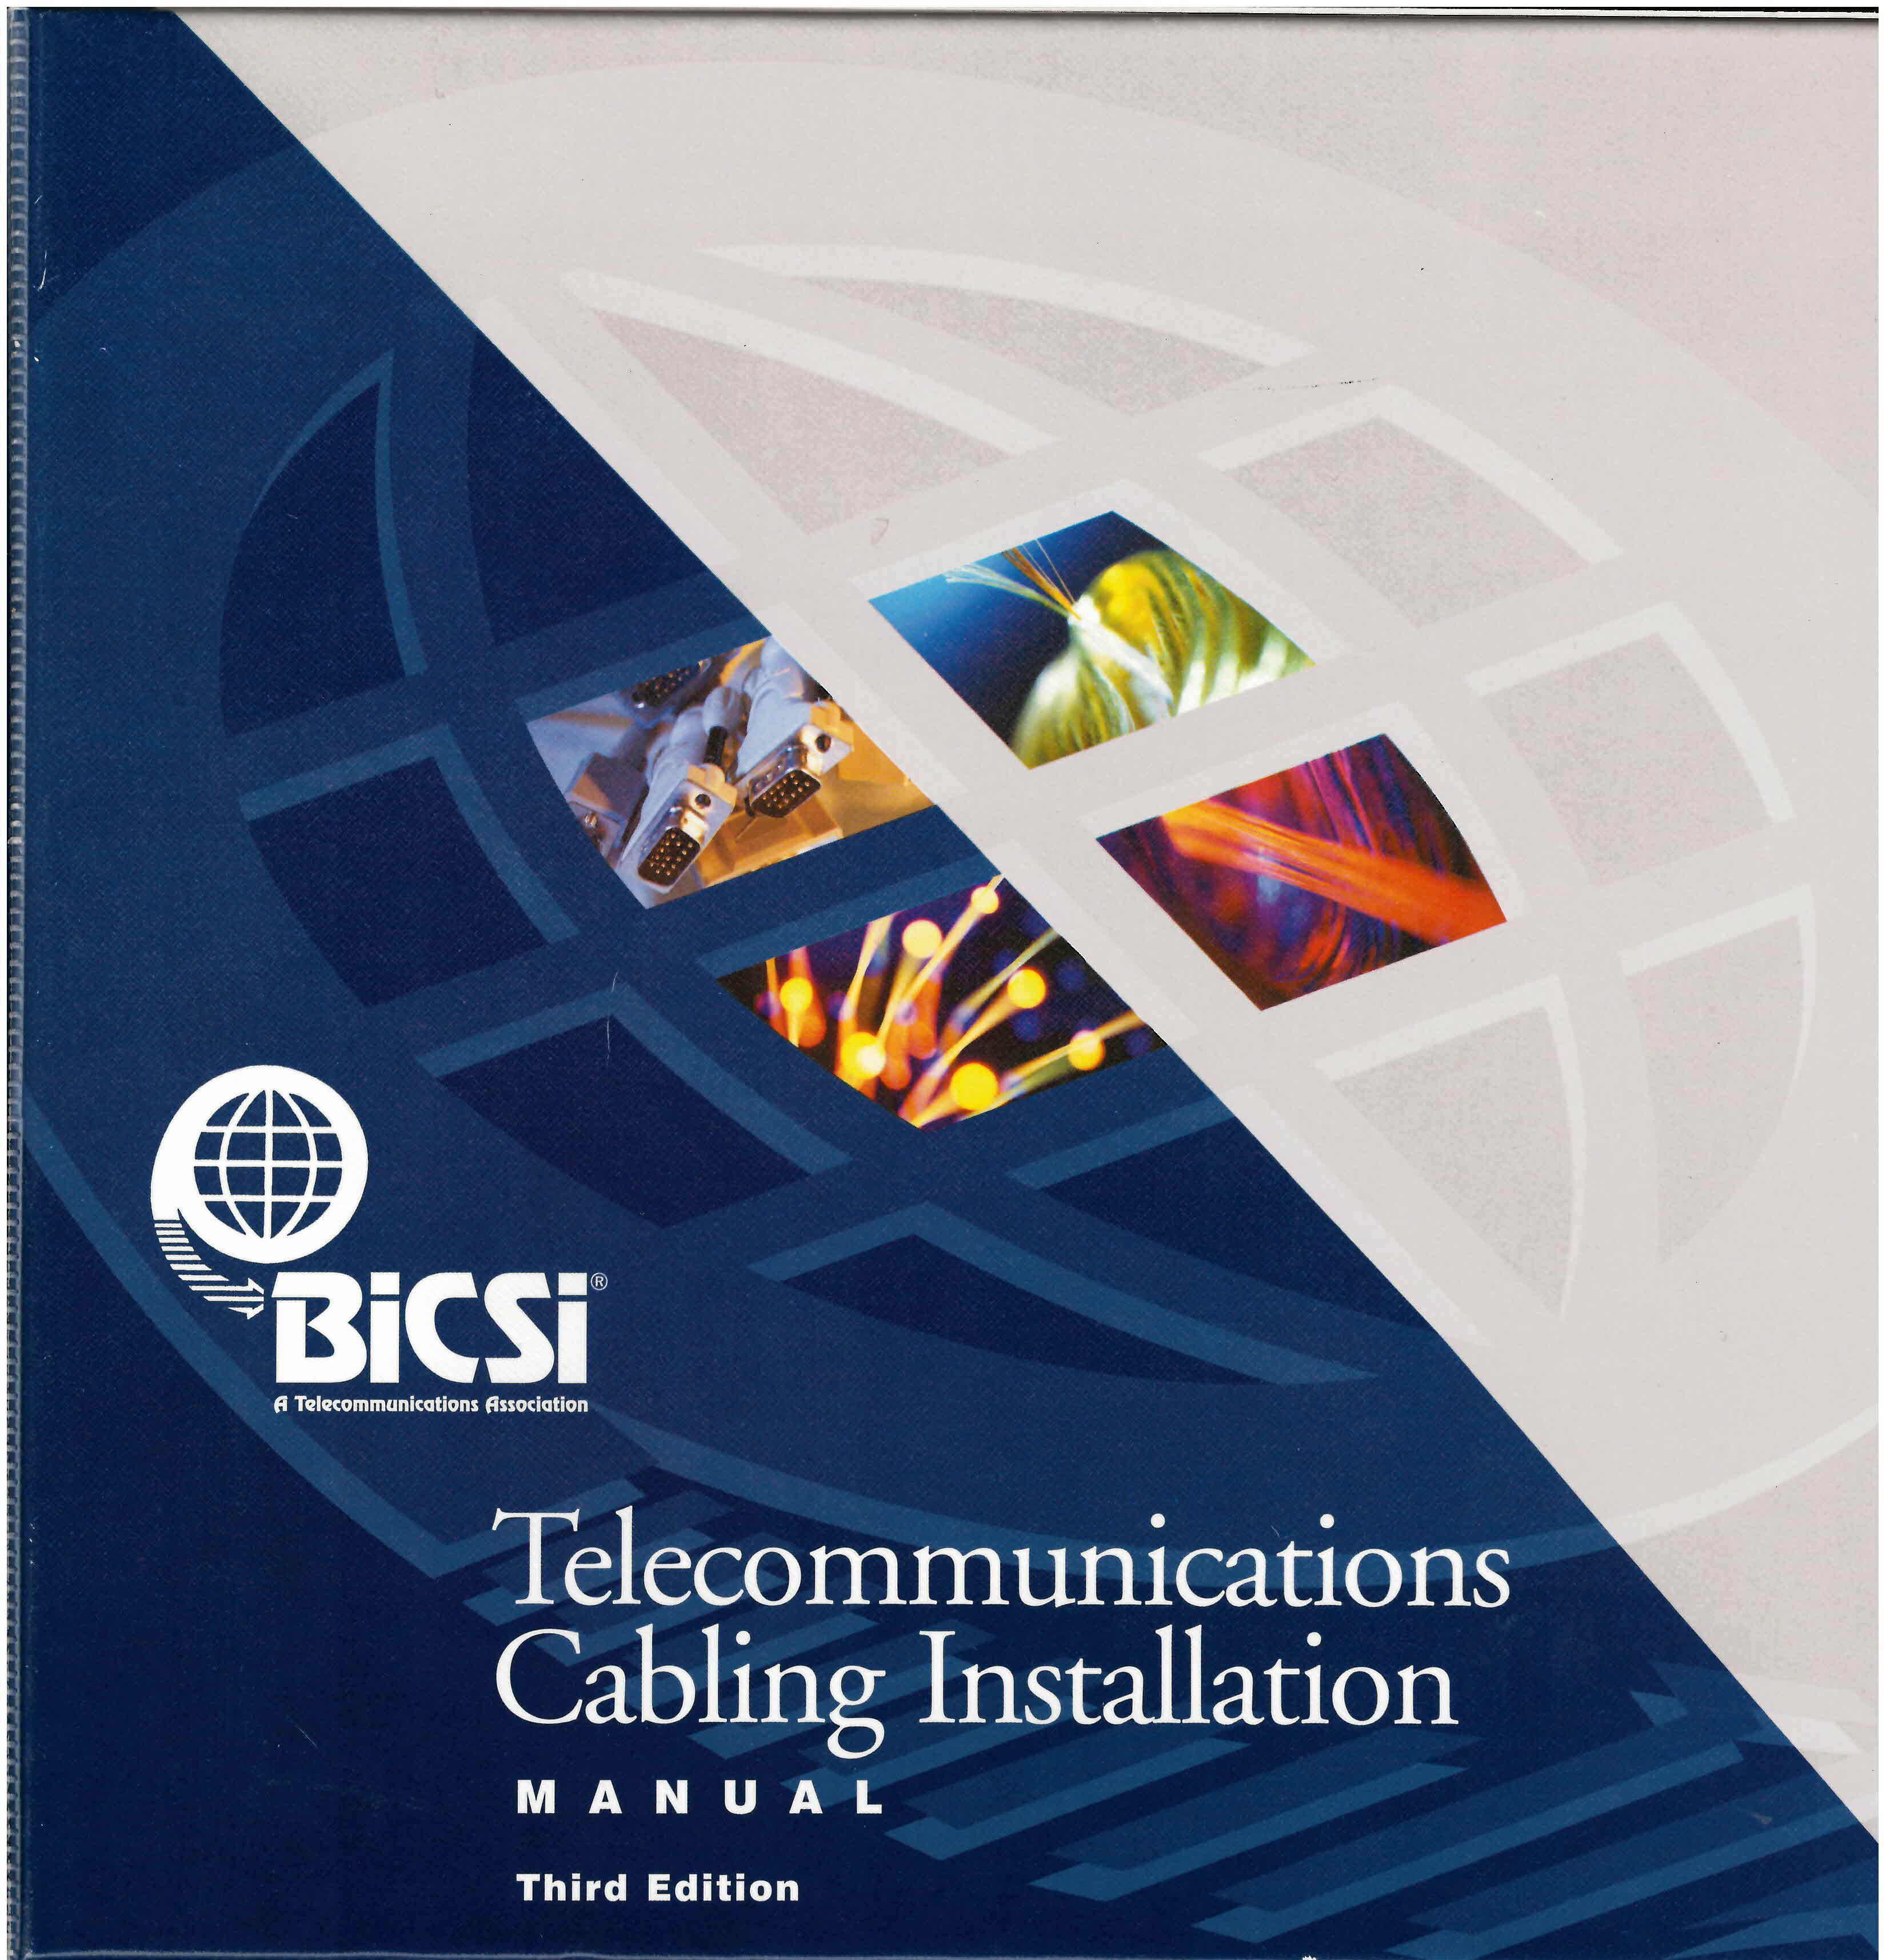 Telecommunications cabling installation manual